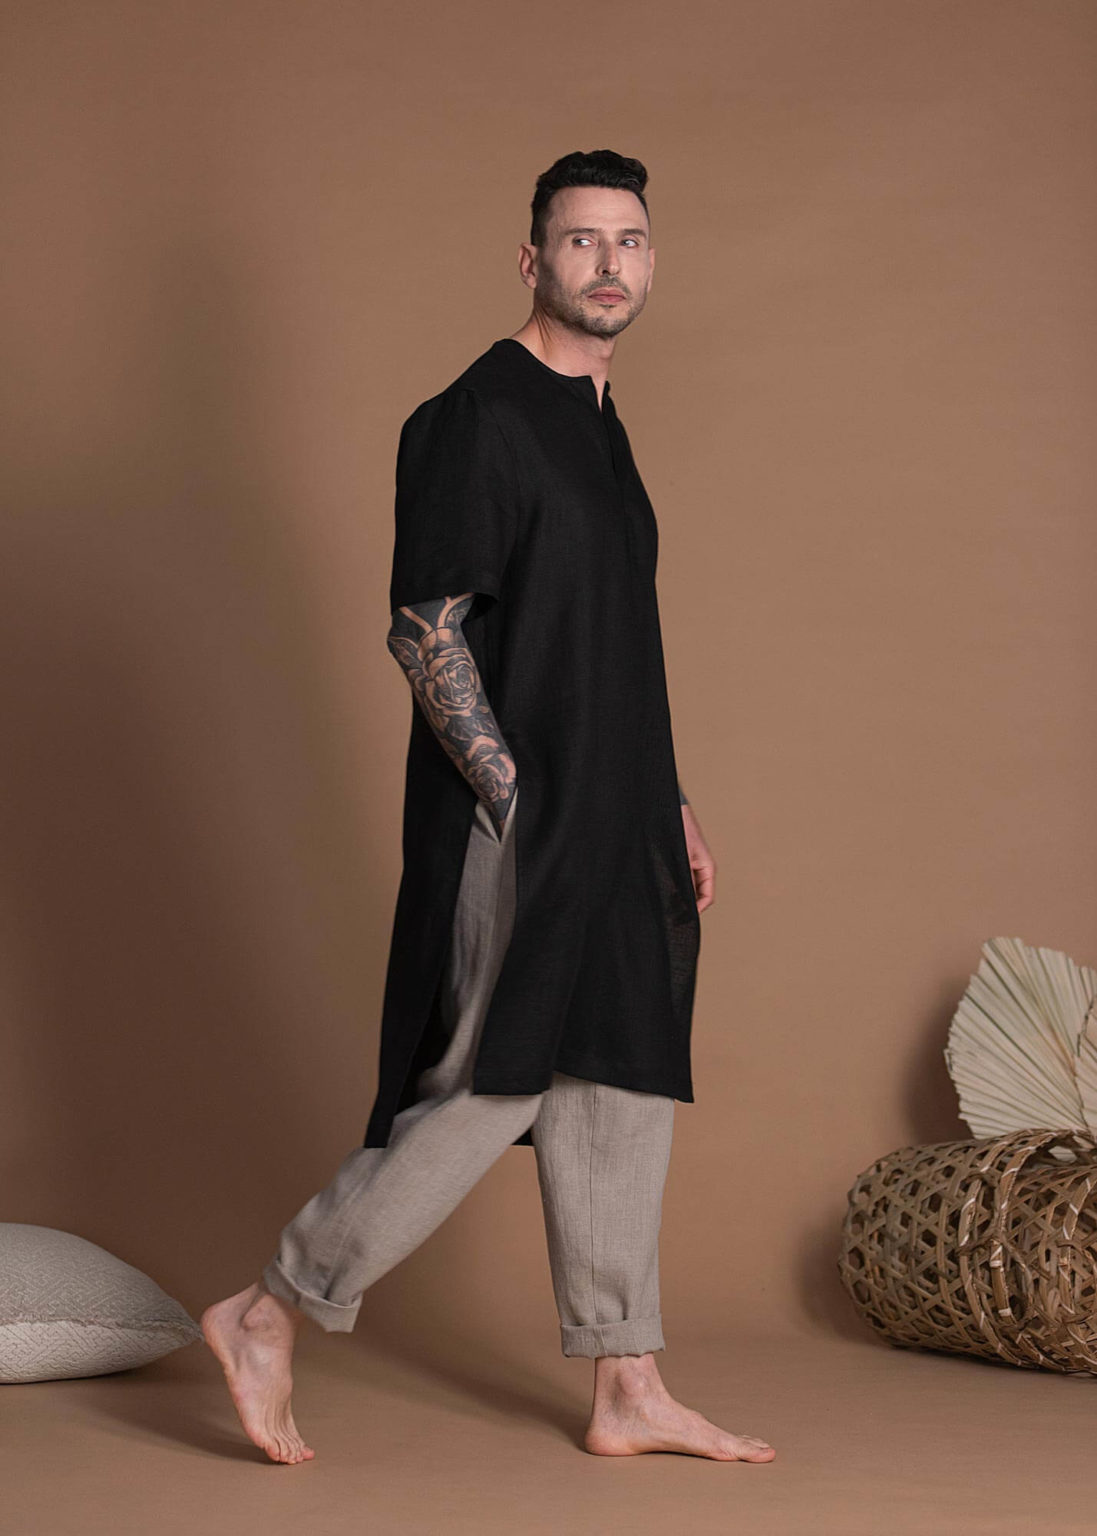 Short Sleeves Linen Tunic | Summer Linen Tunics and Tops |Shantima